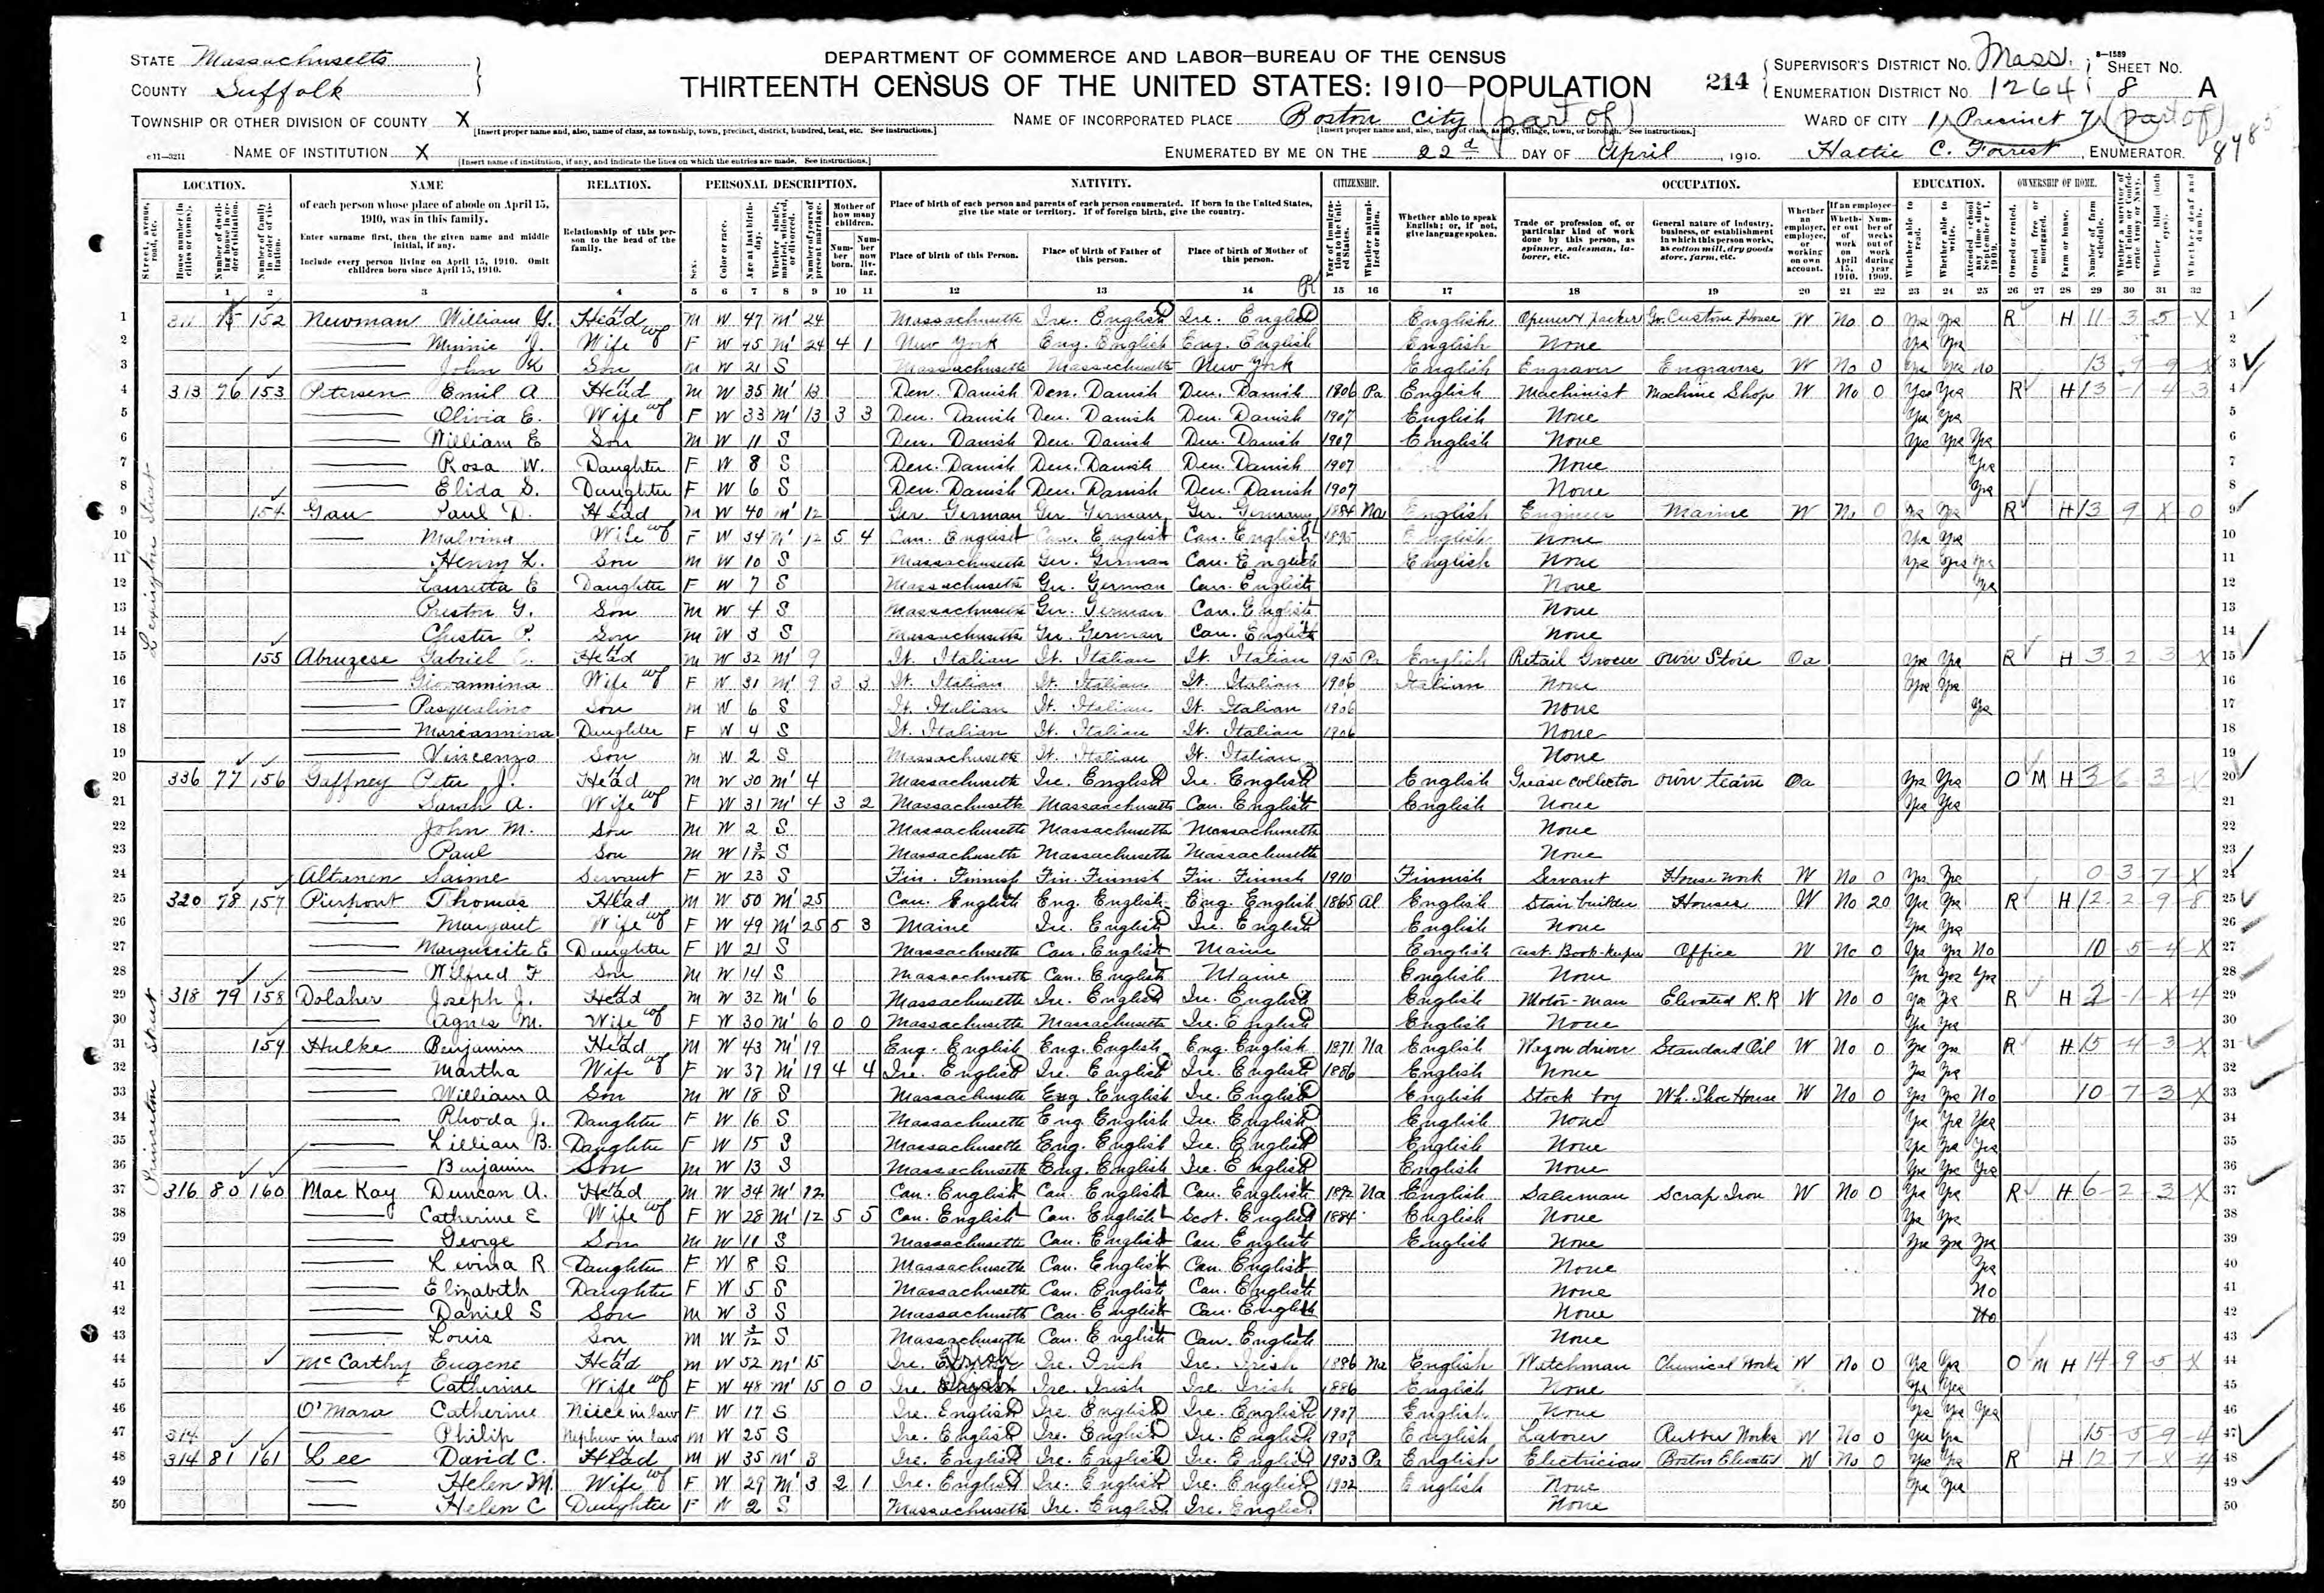 1910 US Census, Henry Gau, line 11